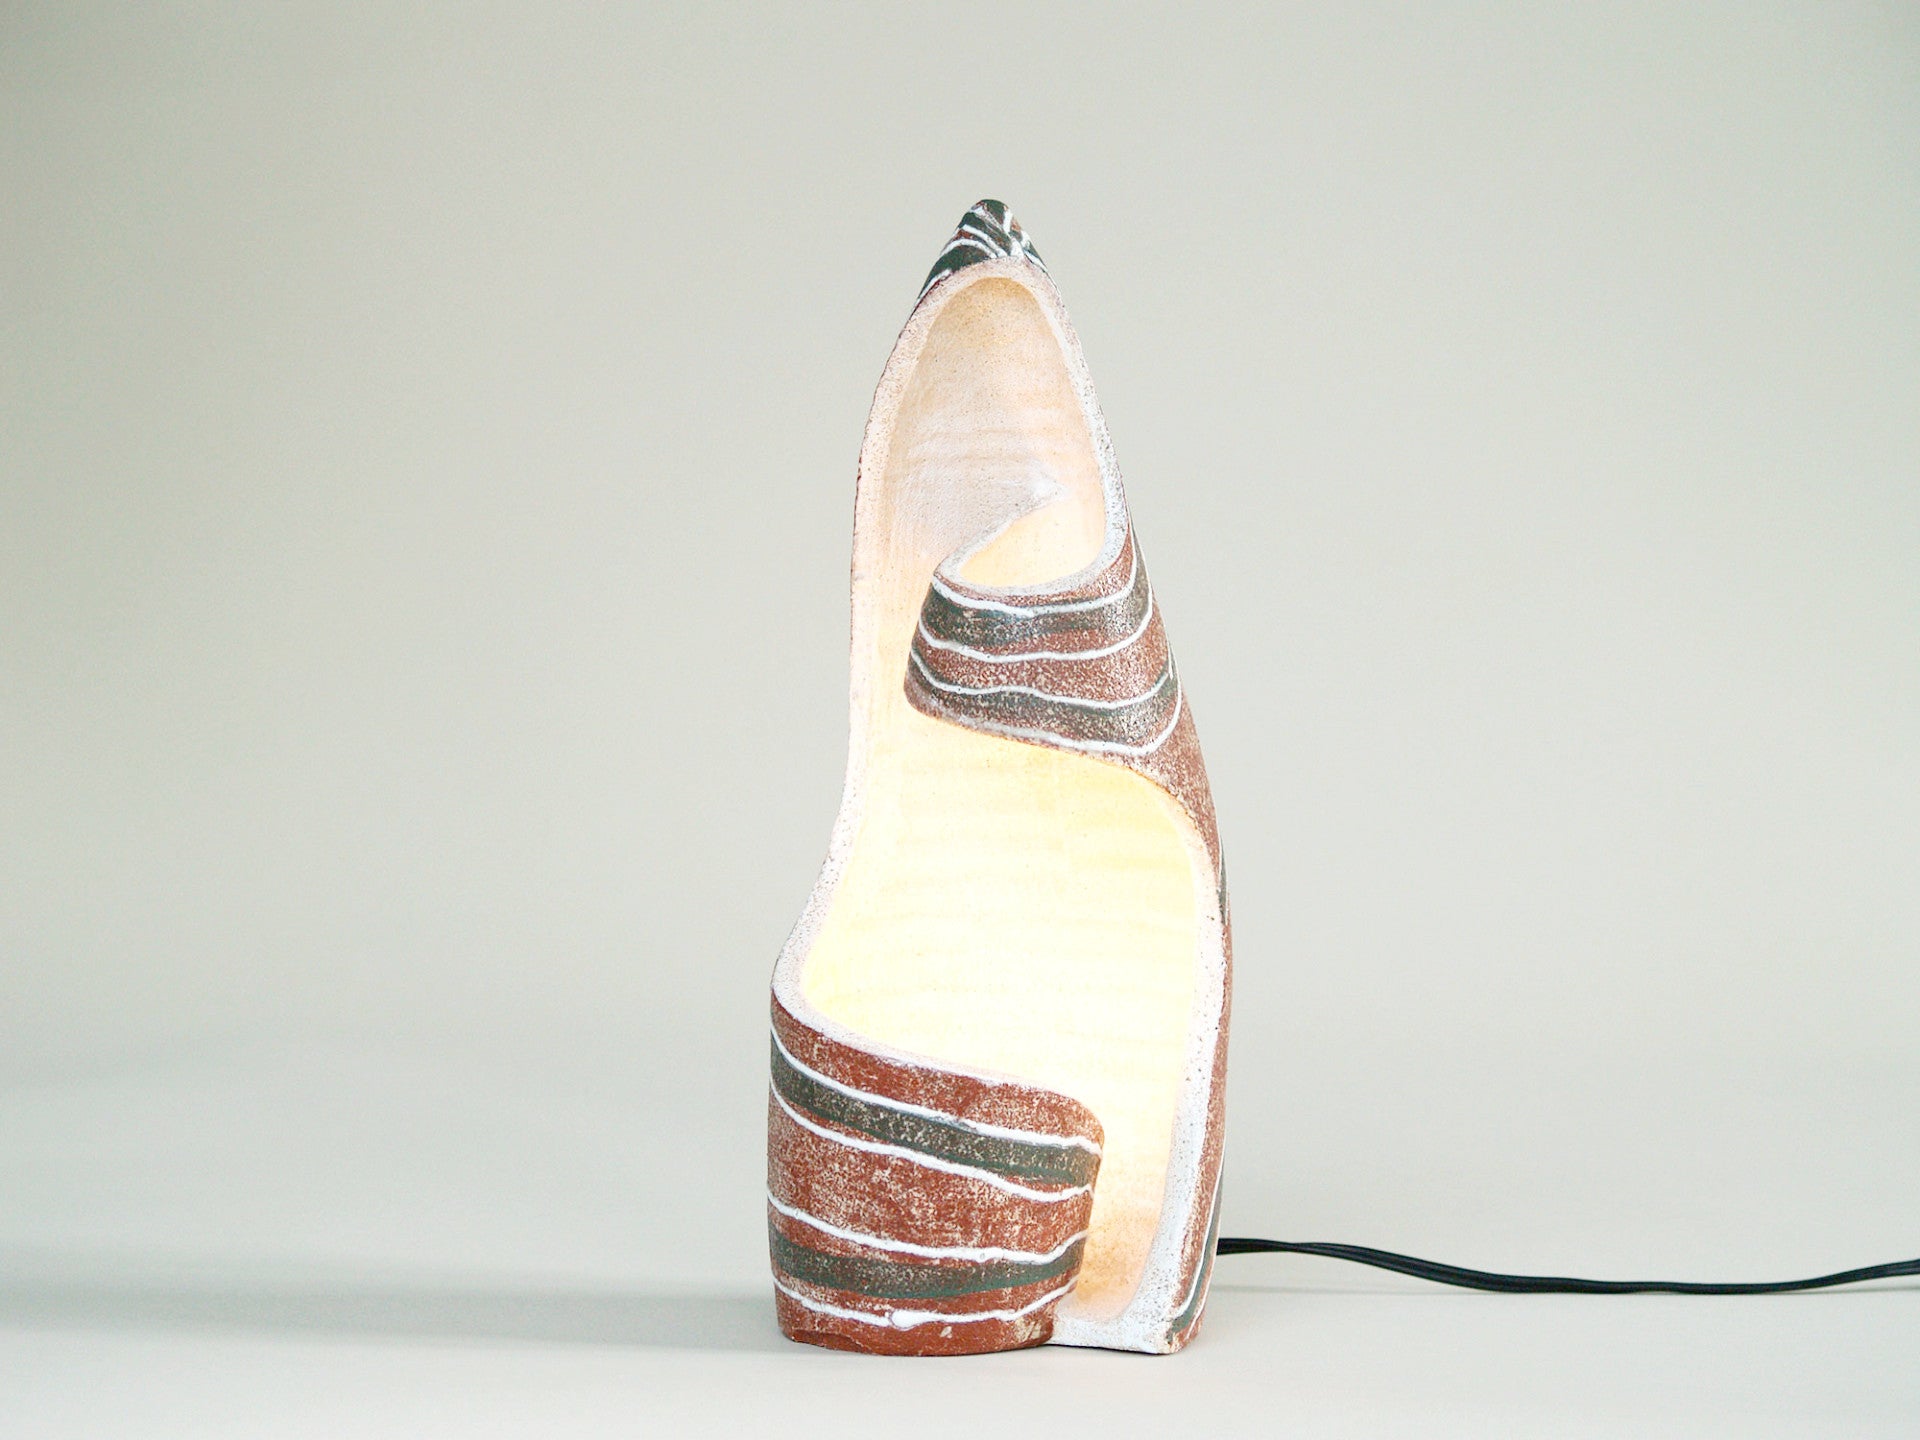 Lampe&#x2011Sculpture des Potiers d'Accolay, France (vers 1957)..Sculptural lamp by Les Potiers d'Accolay, France (Circa 1957)